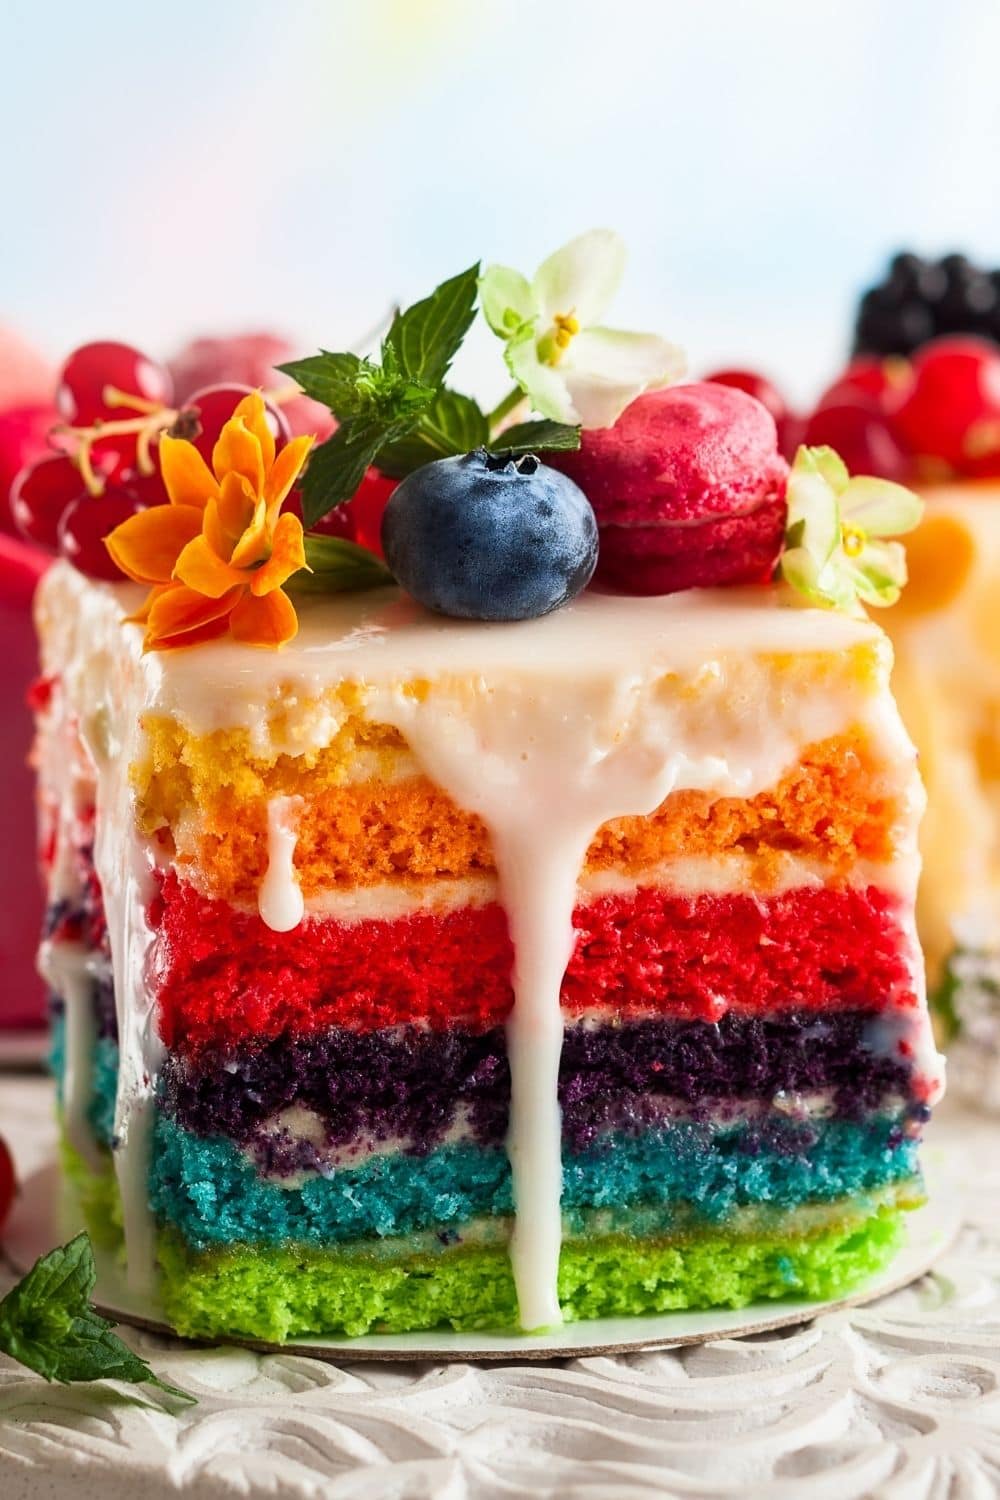 33 Fun Birthday Cake Ideas - Insanely Good Recipes